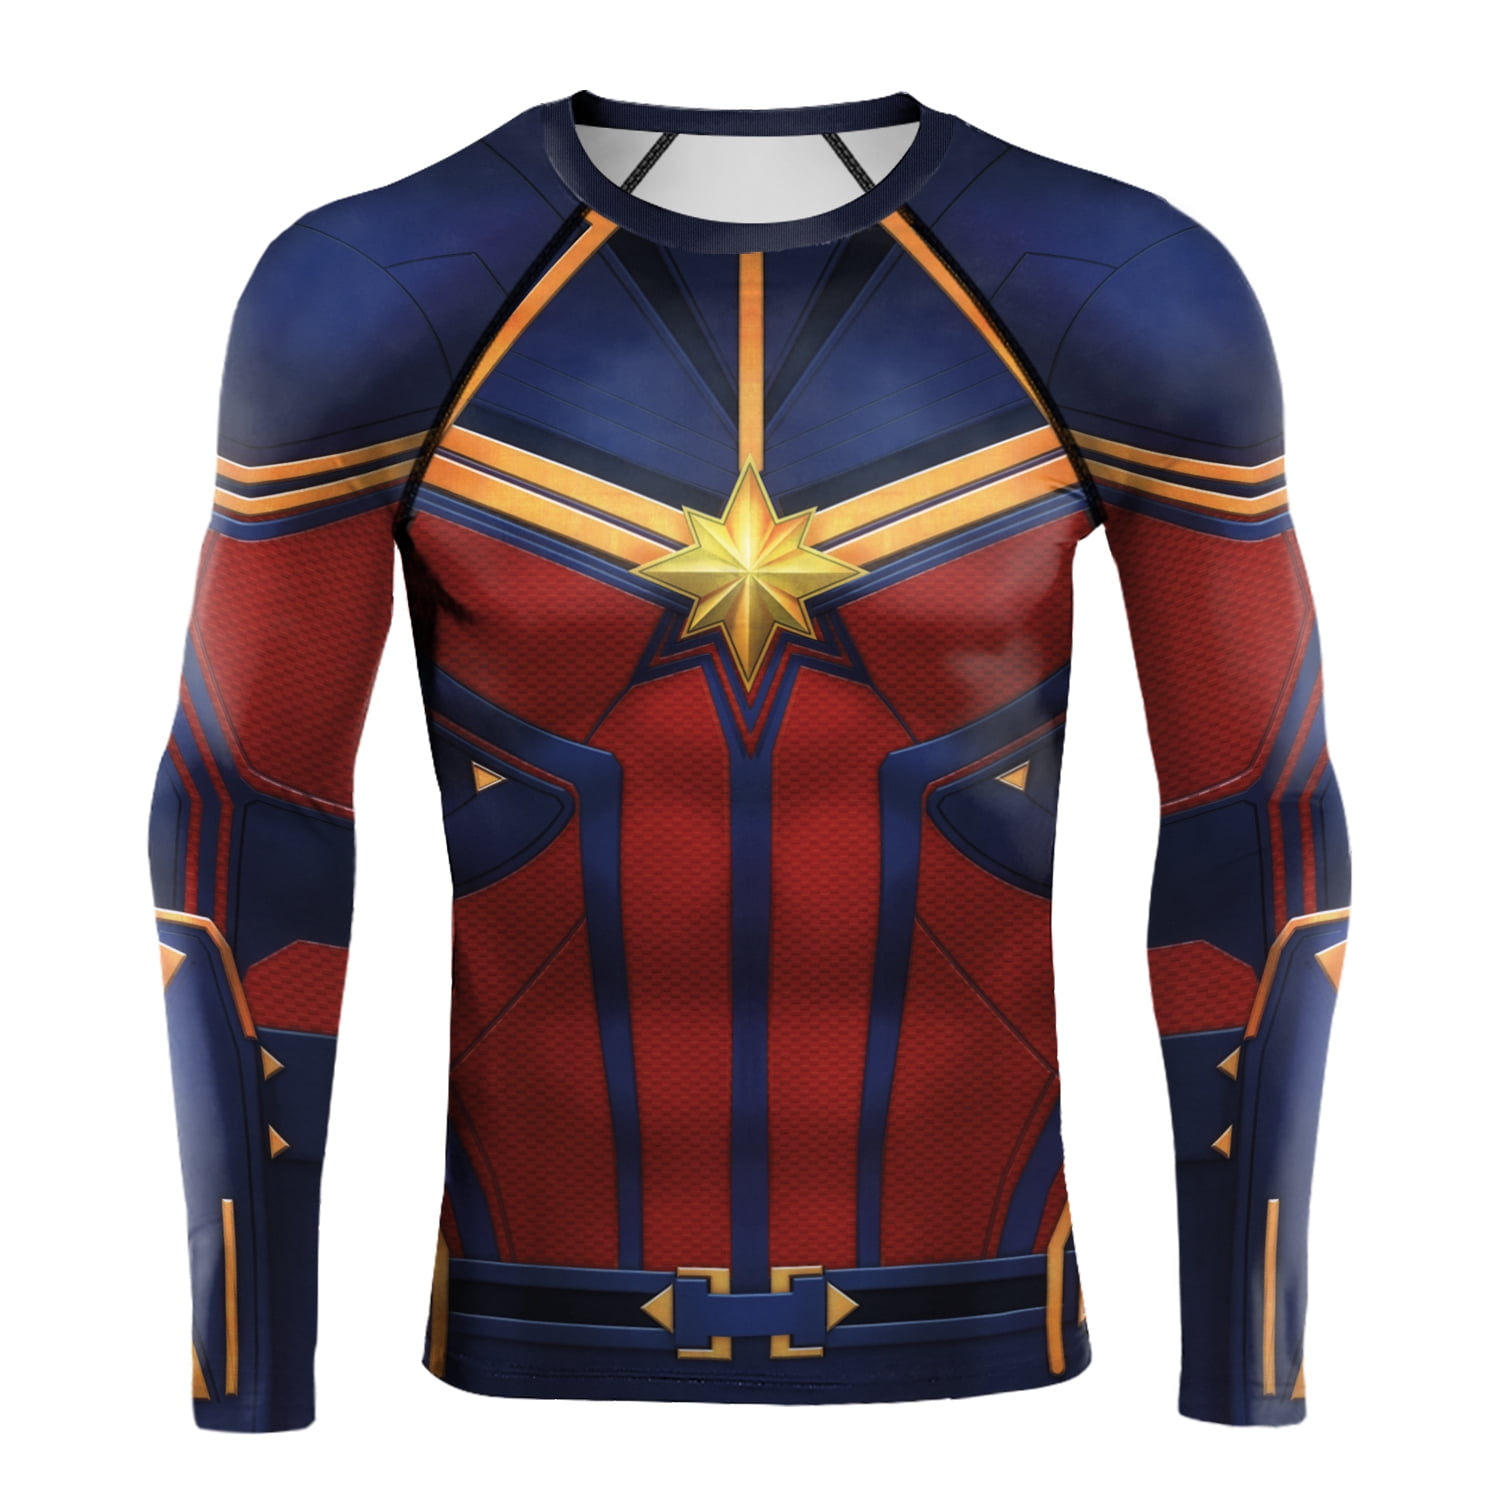 Mens Marvel Superhero The Avengers Costume Top Tee T-Shirt Jersey Cycling Shirts 